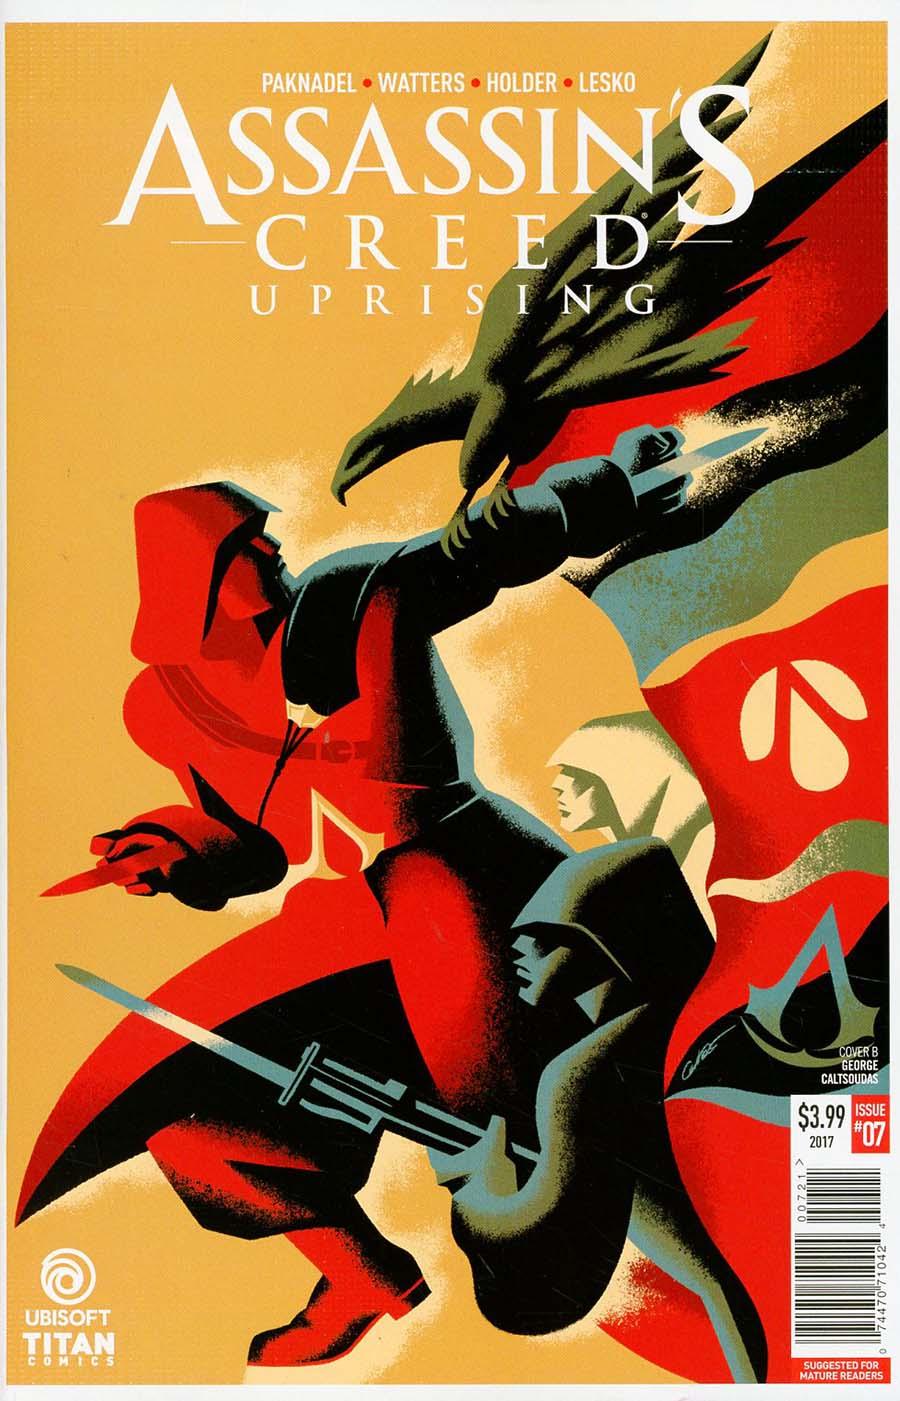 Assassins Creed Uprising Vol. 1 #7